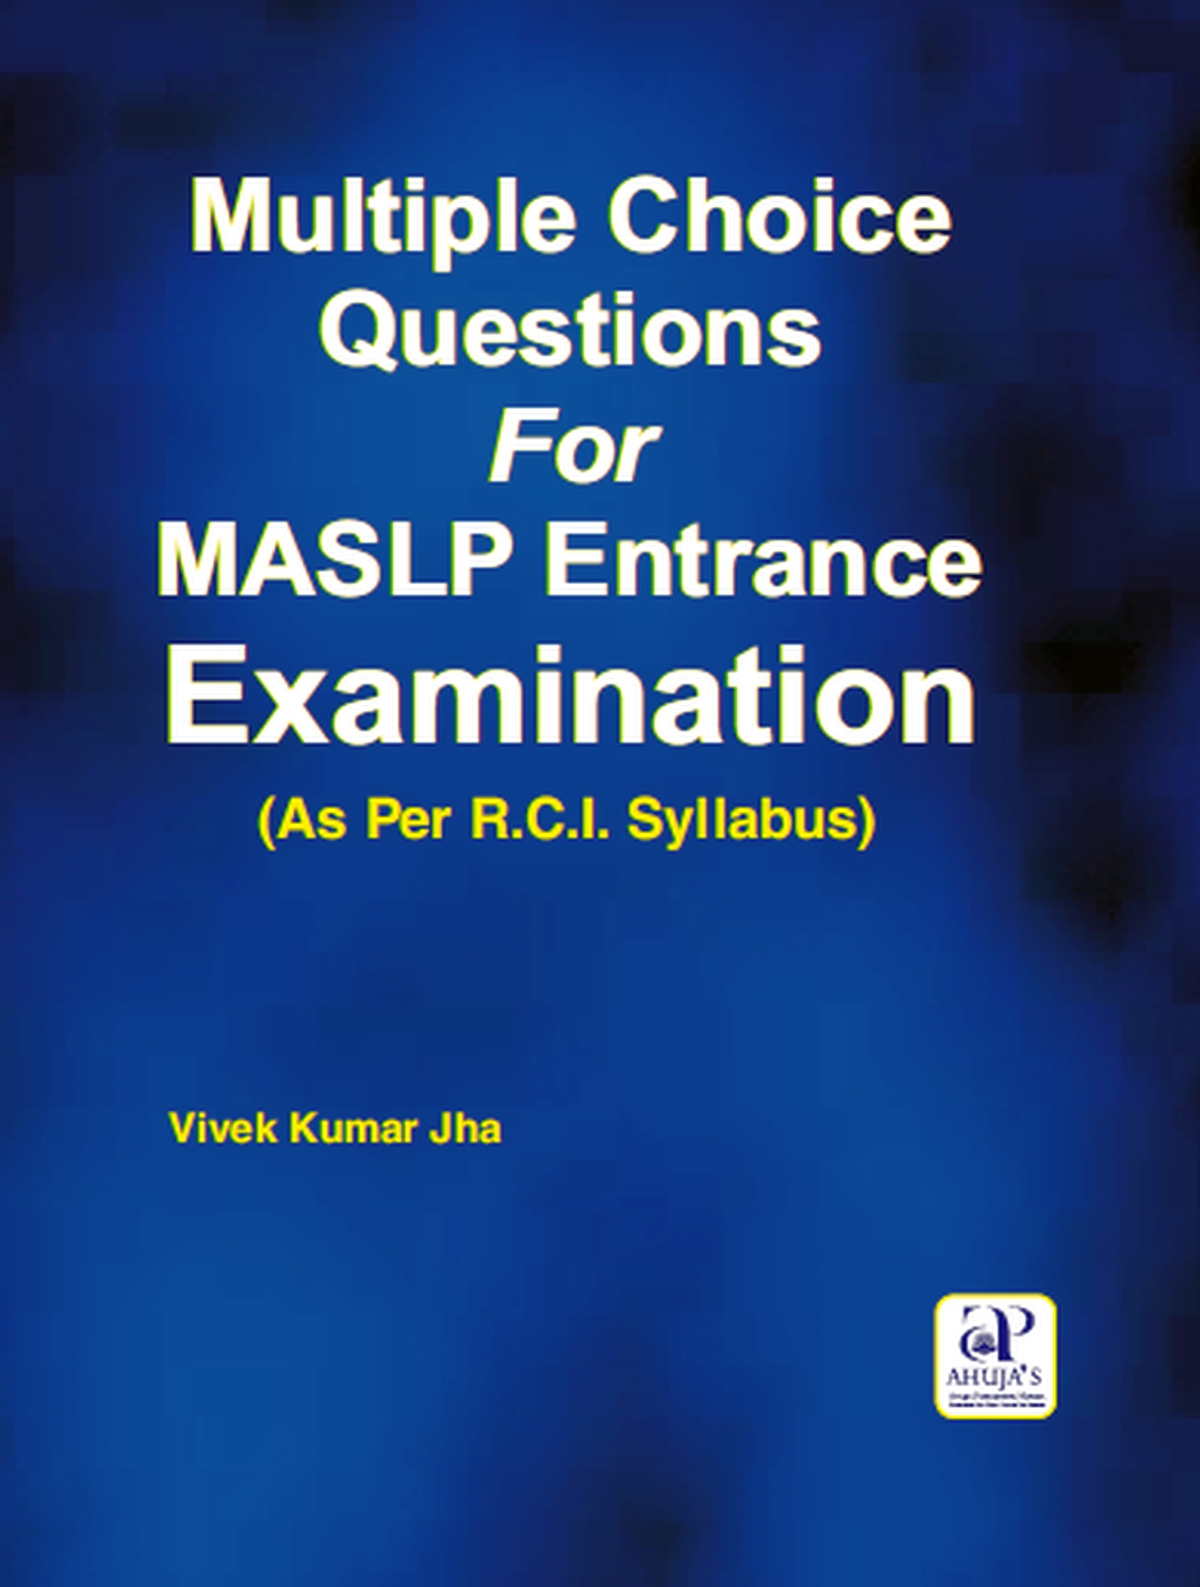 MULTIPLE CHOICE QUESTIONS FOR MASLP ENTRANCE EXAMINATION